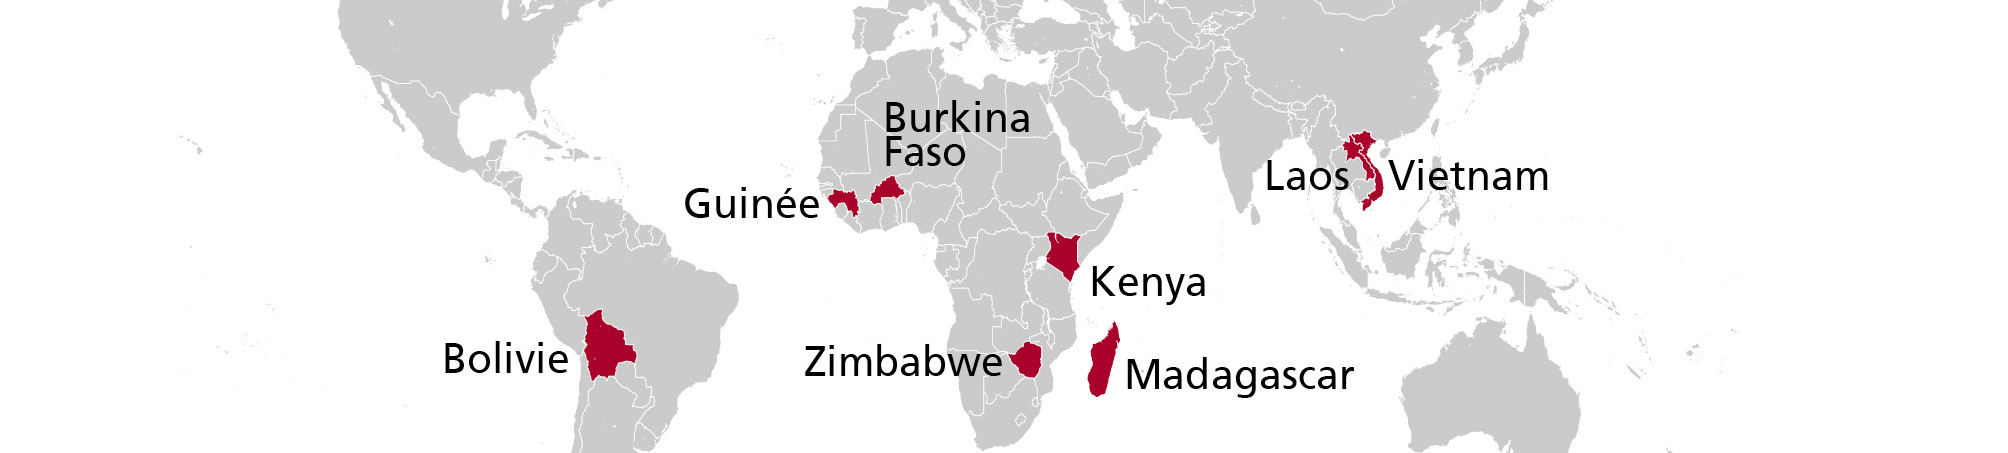 Où CBM aide en ophtalmologie: Bolivie, Burkina Faso, Guinée, Kenya, Madagascar, Zimbabwe, Laos, Vietnam.